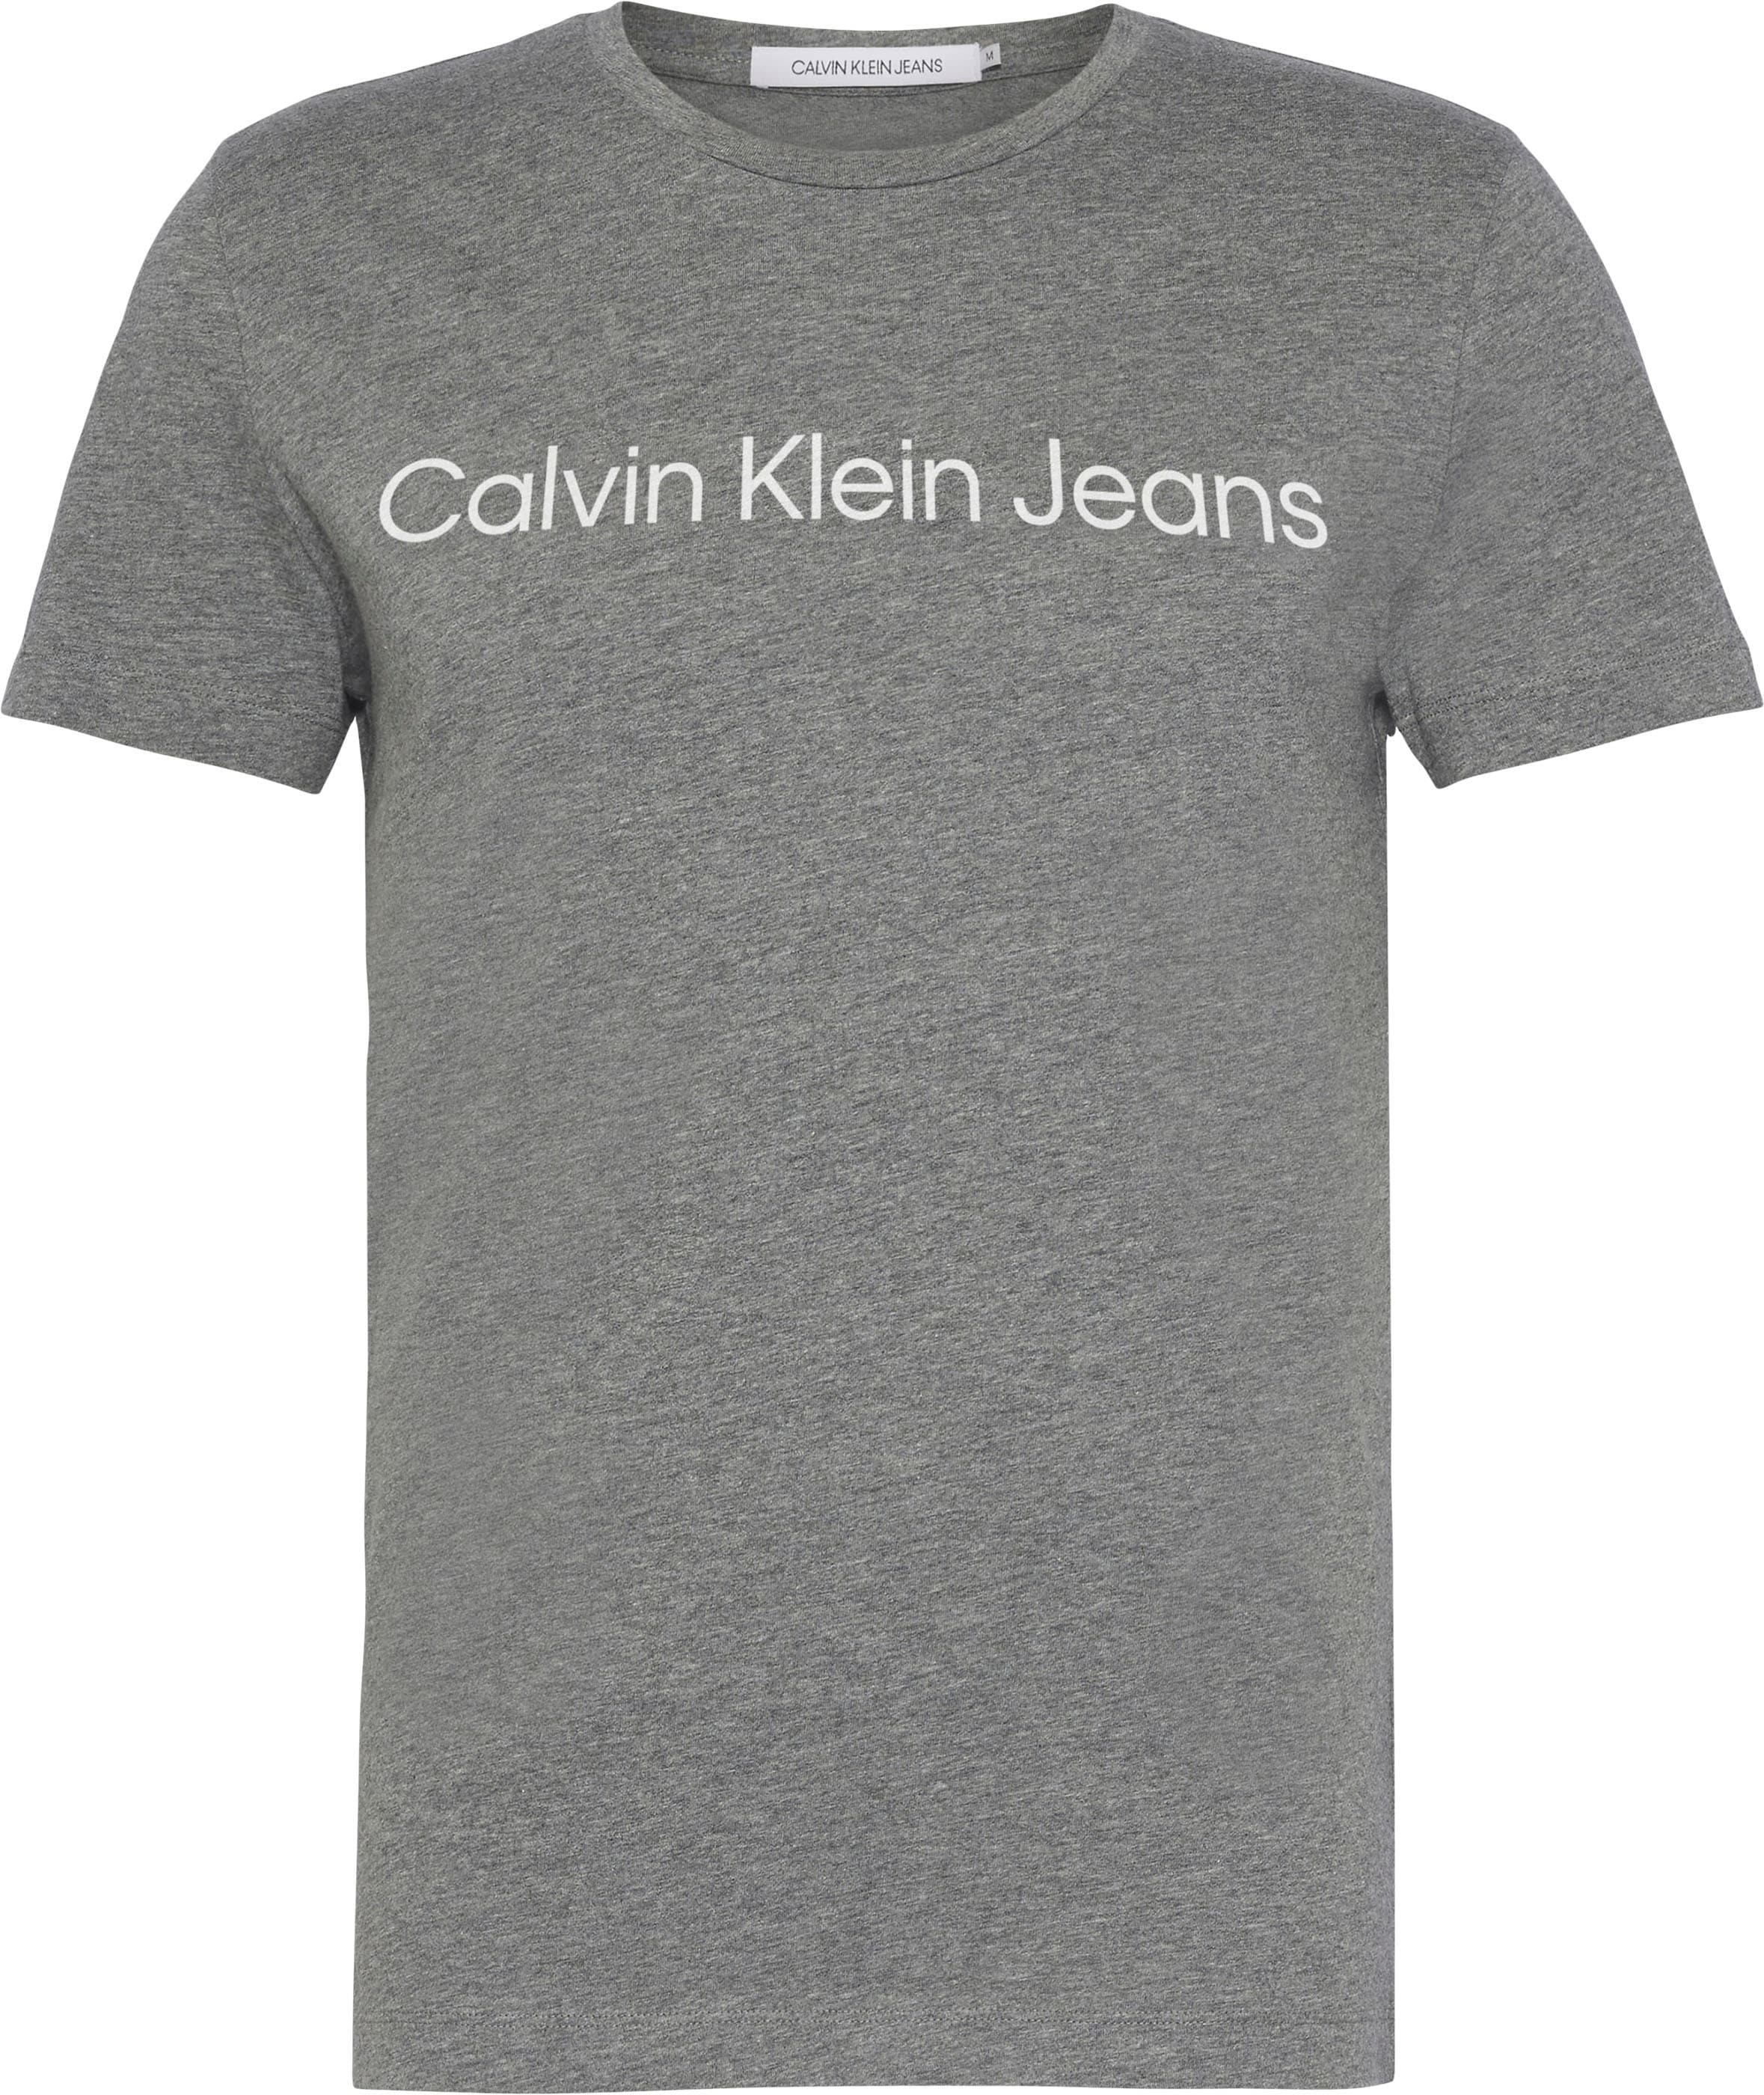 Jeans INSTITUTIONAL Klein bei »CORE SLIM TEE« Calvin T-Shirt ♕ LOGO